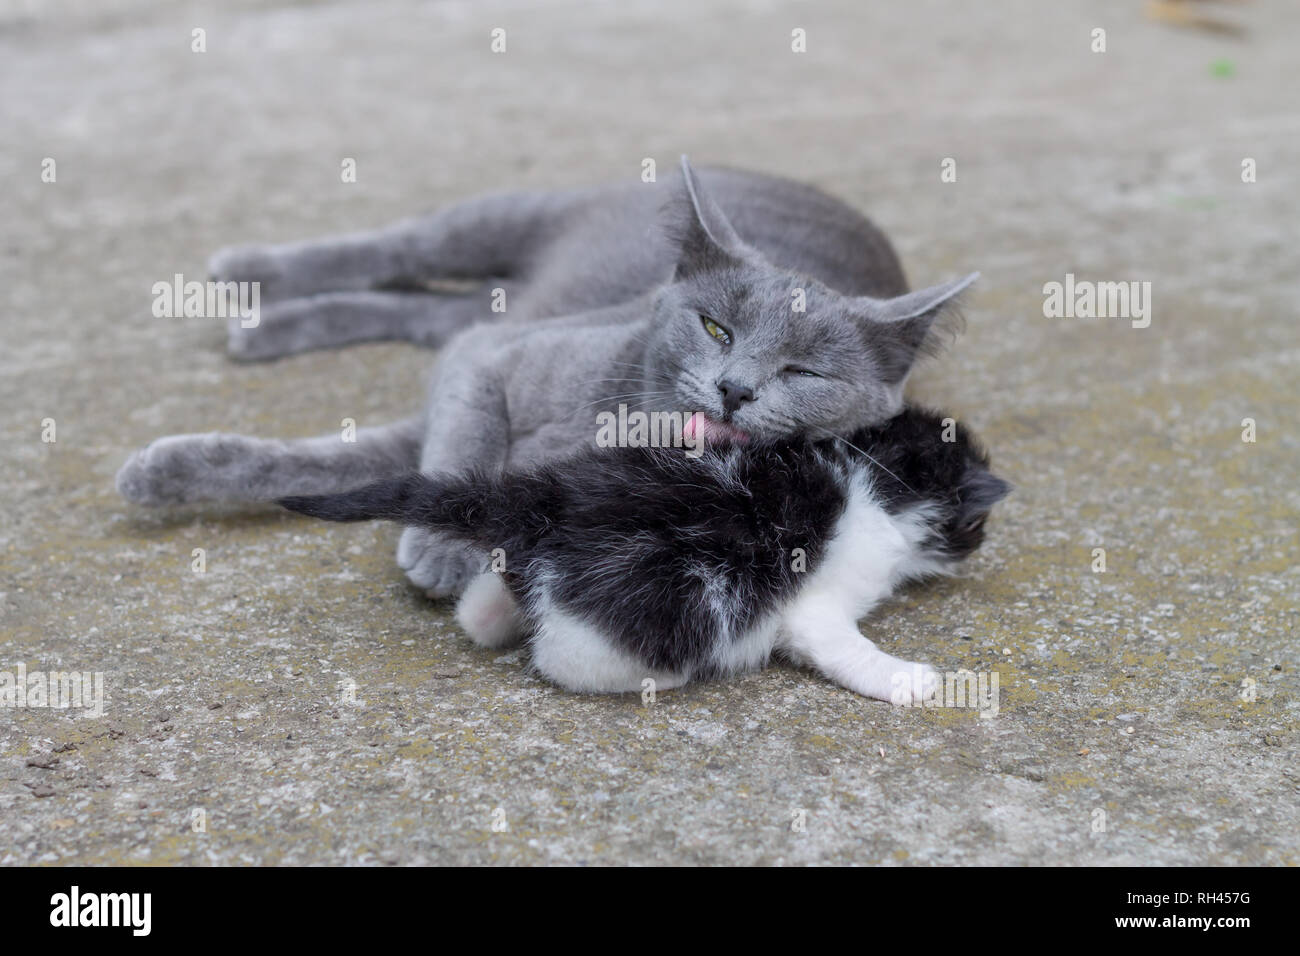 Mother cat grooming her baby kitten Stock Photo